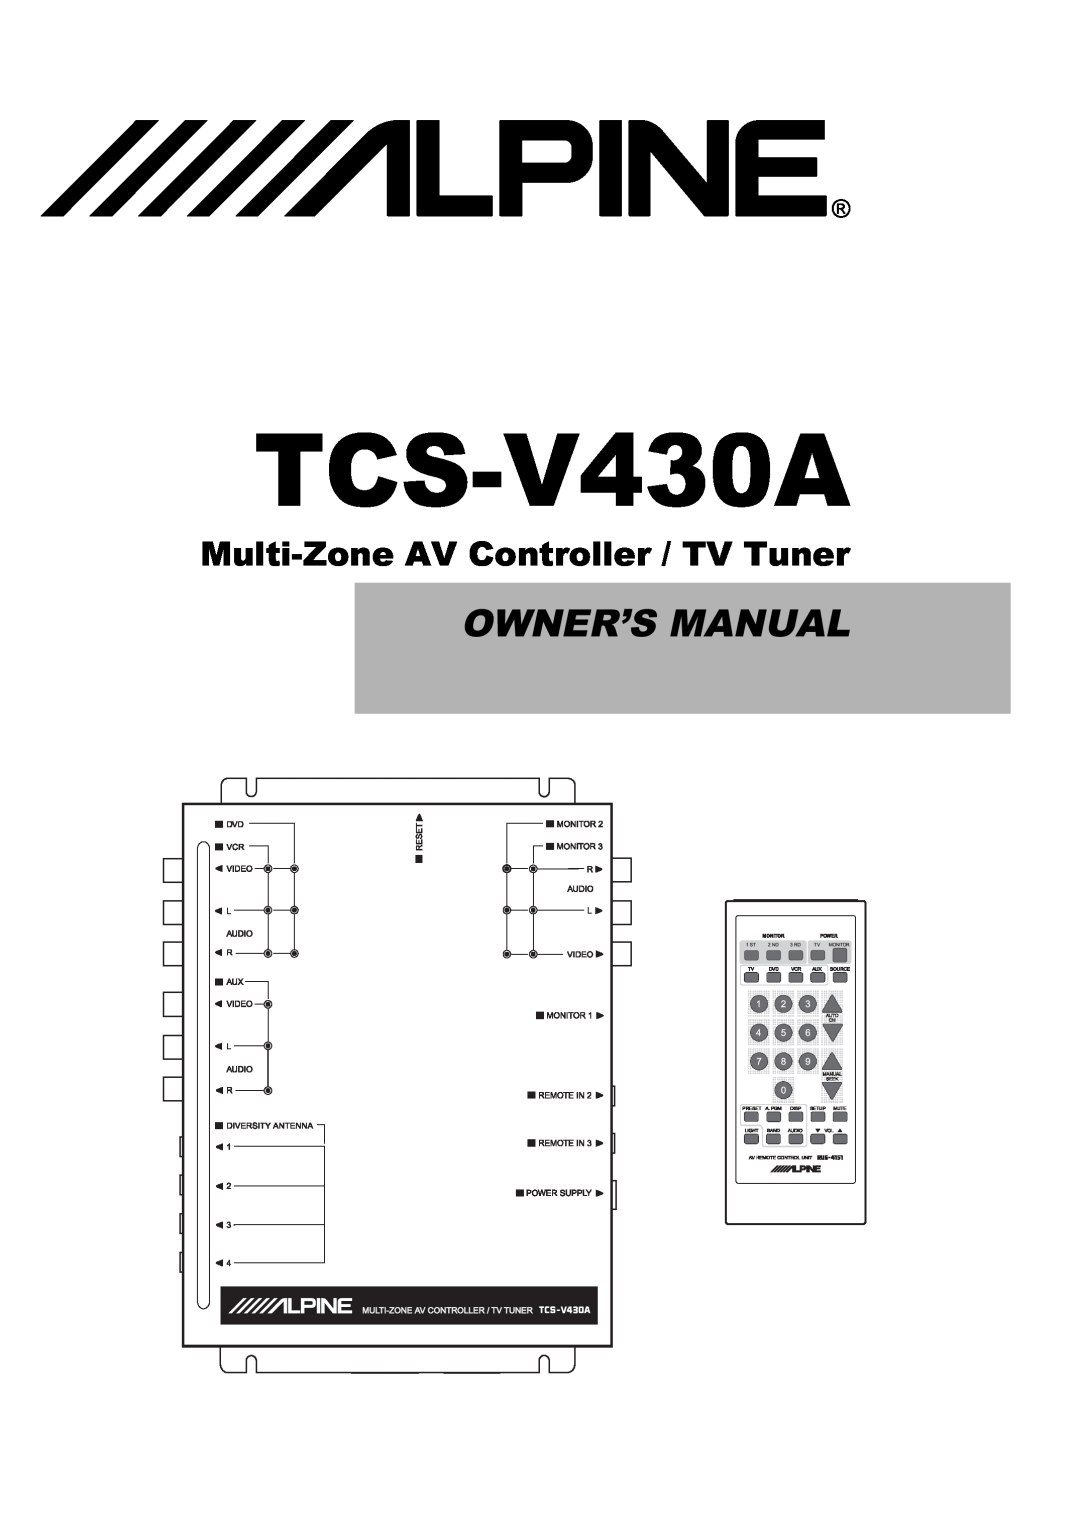 Alpine TCS-V430A owner manual Ownerõs Manual, Multi-Zone AV Controller / TV Tuner 